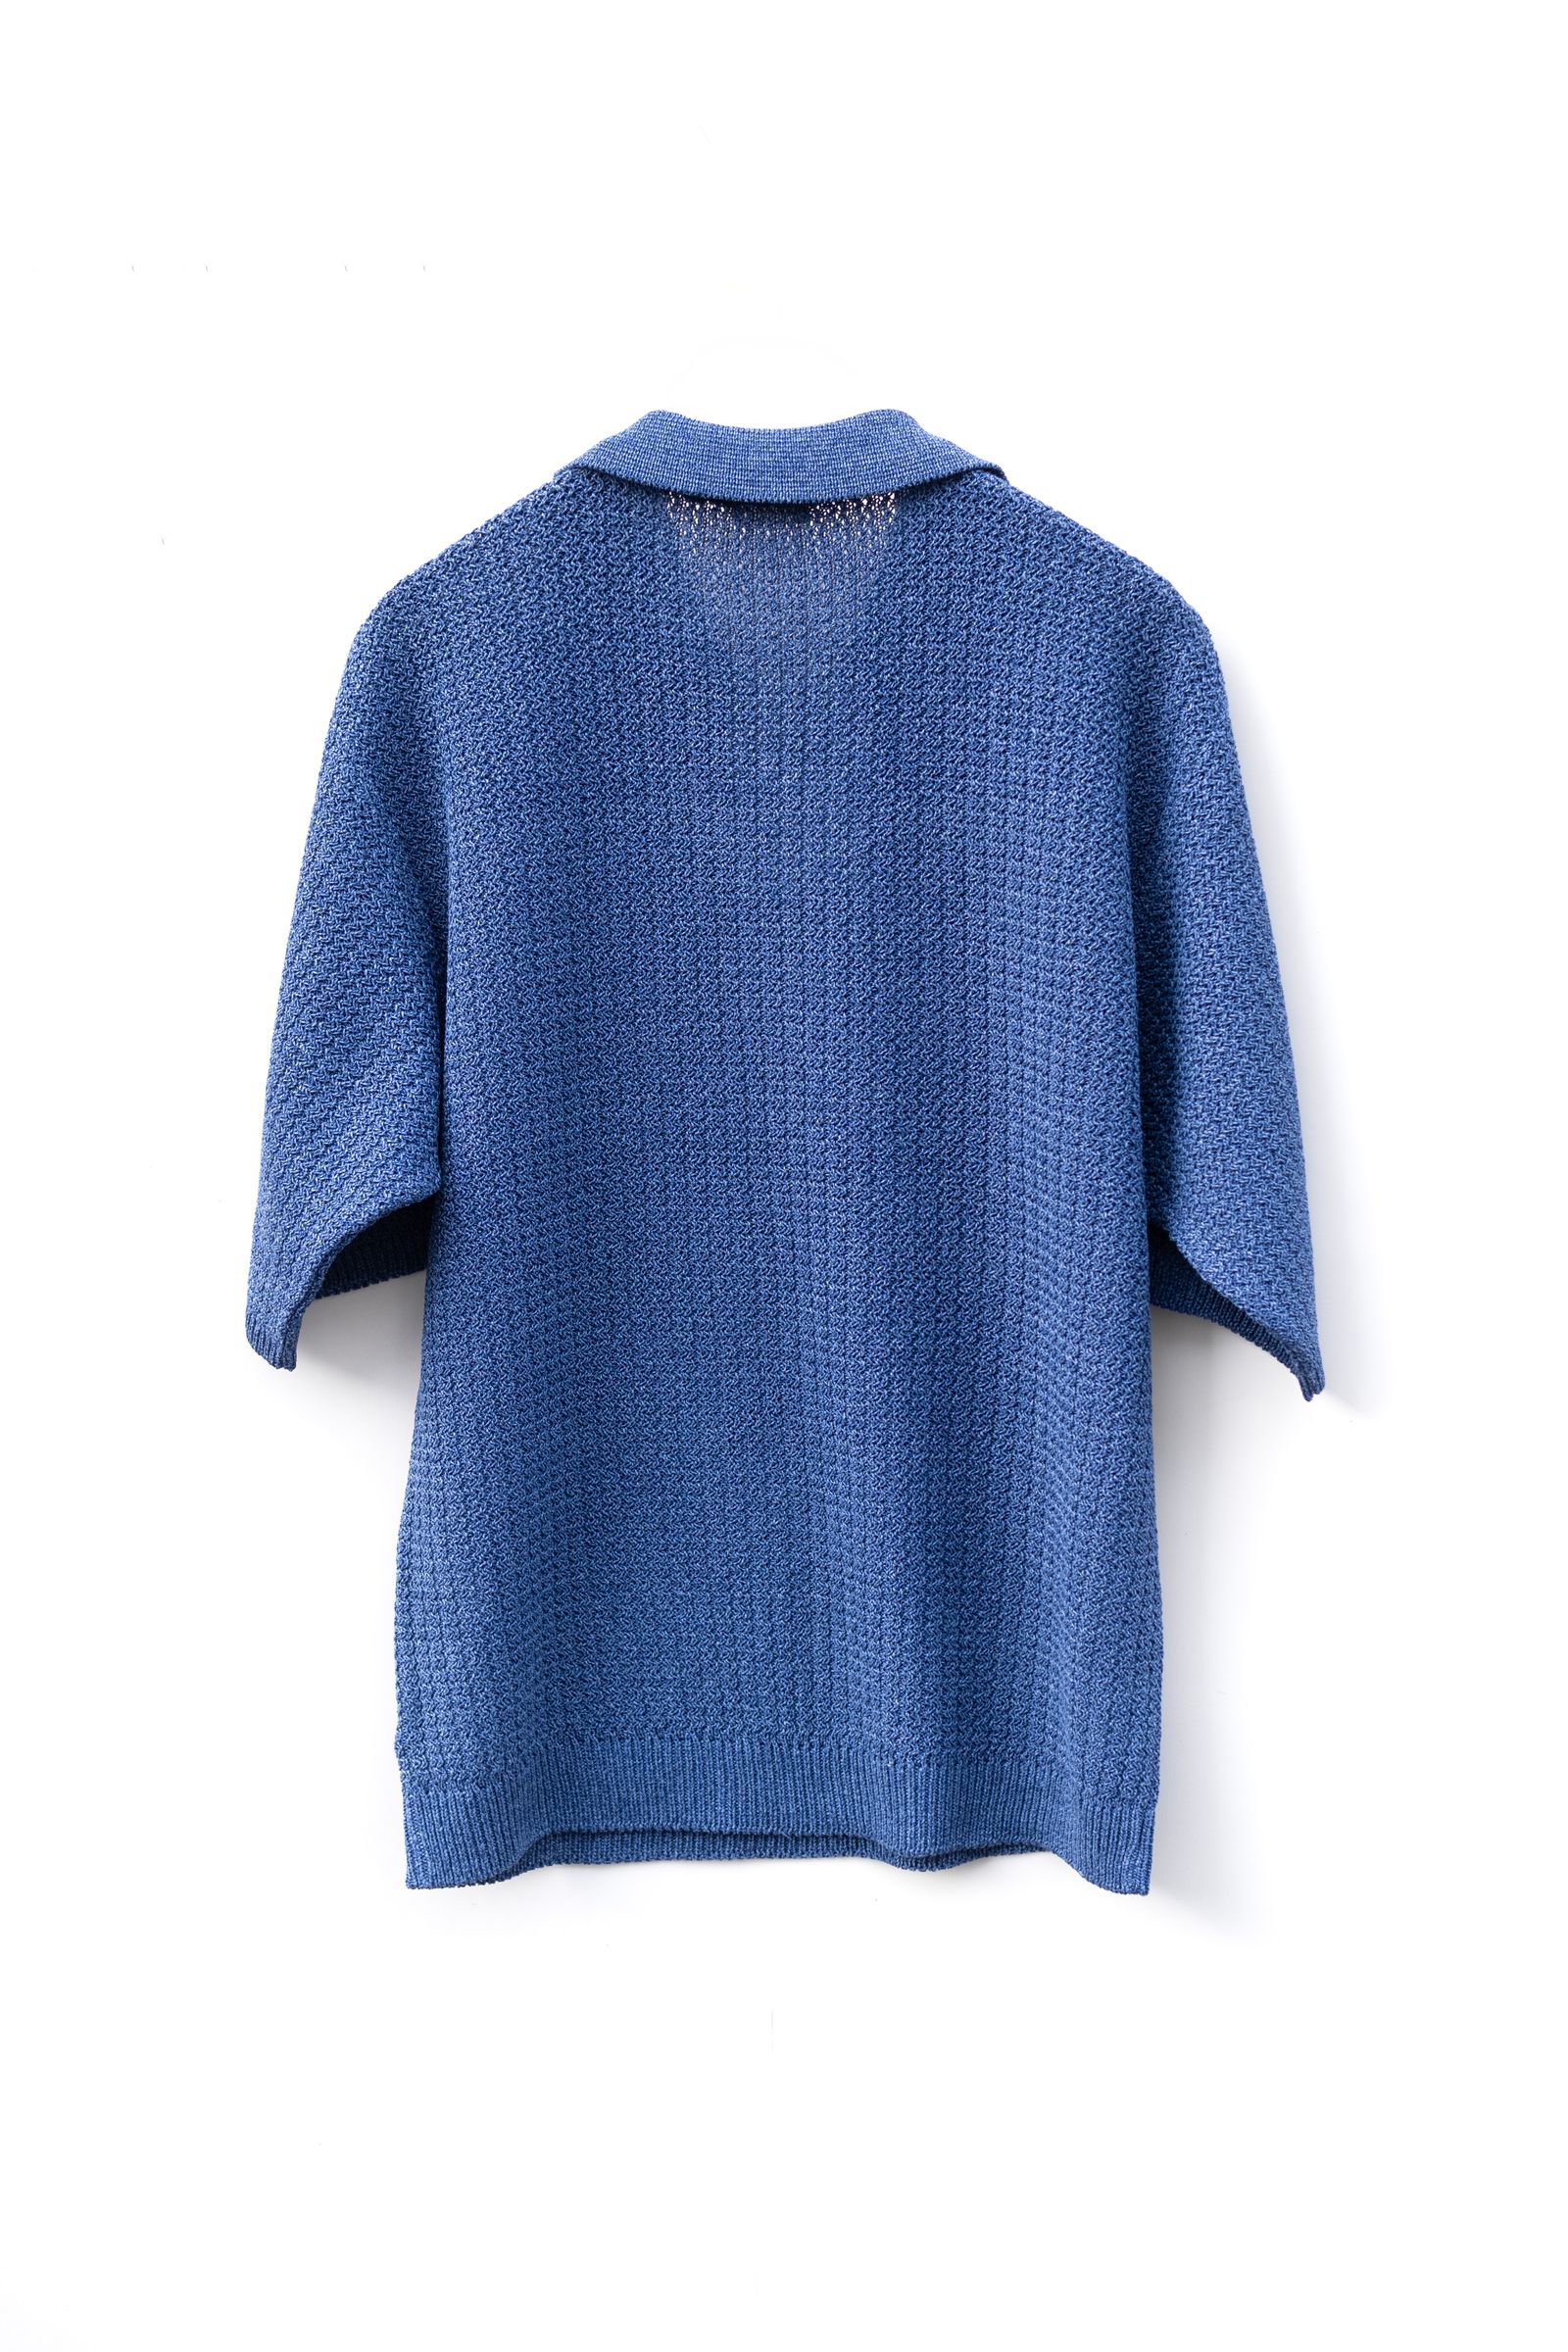 Blanc YM - Skipper knit Shirt / Charcoal Gray | Retikle Online Store